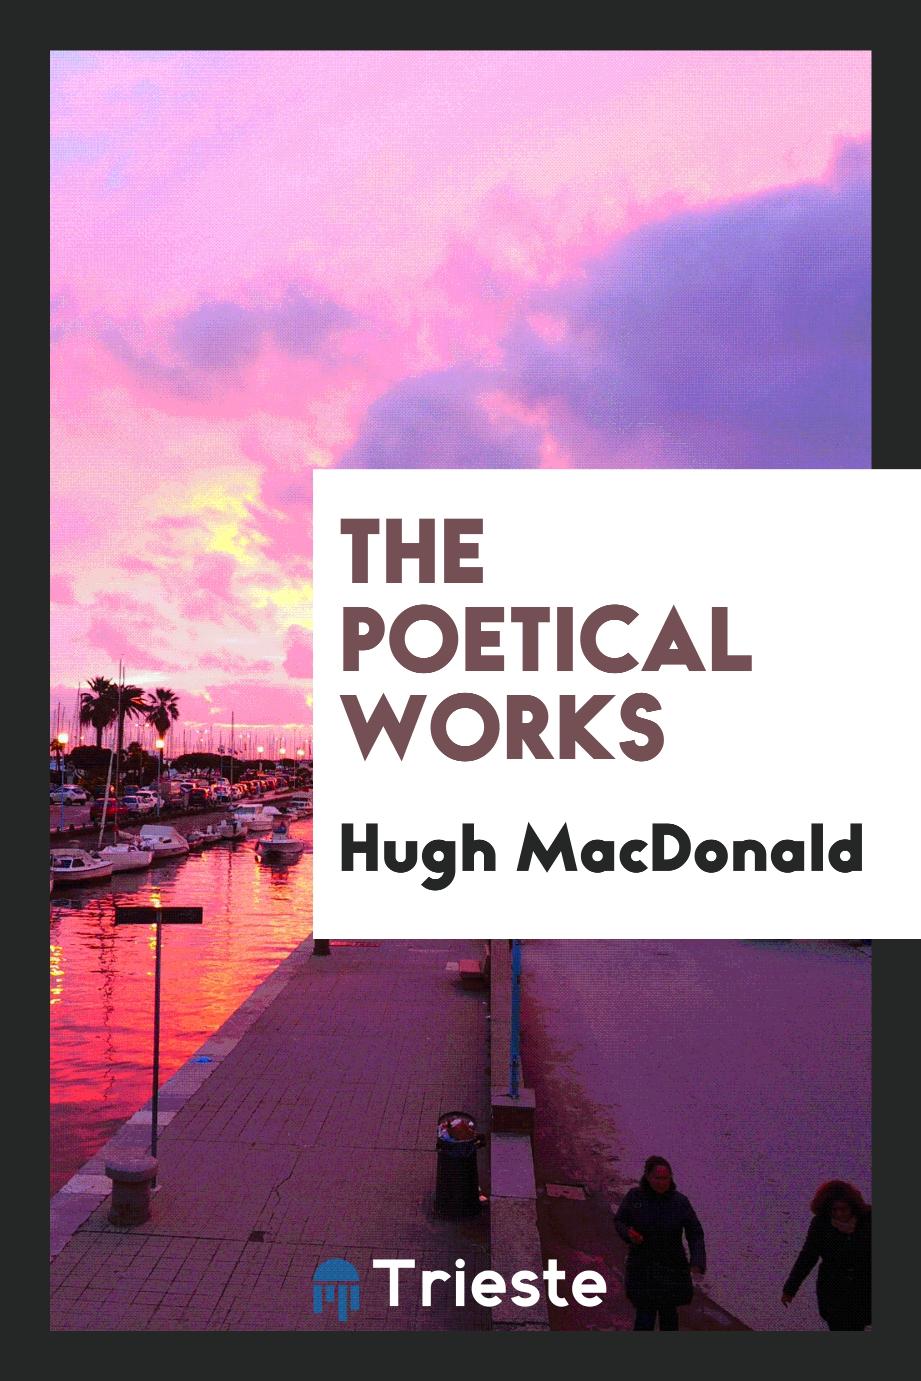 Hugh MacDonald - The poetical works